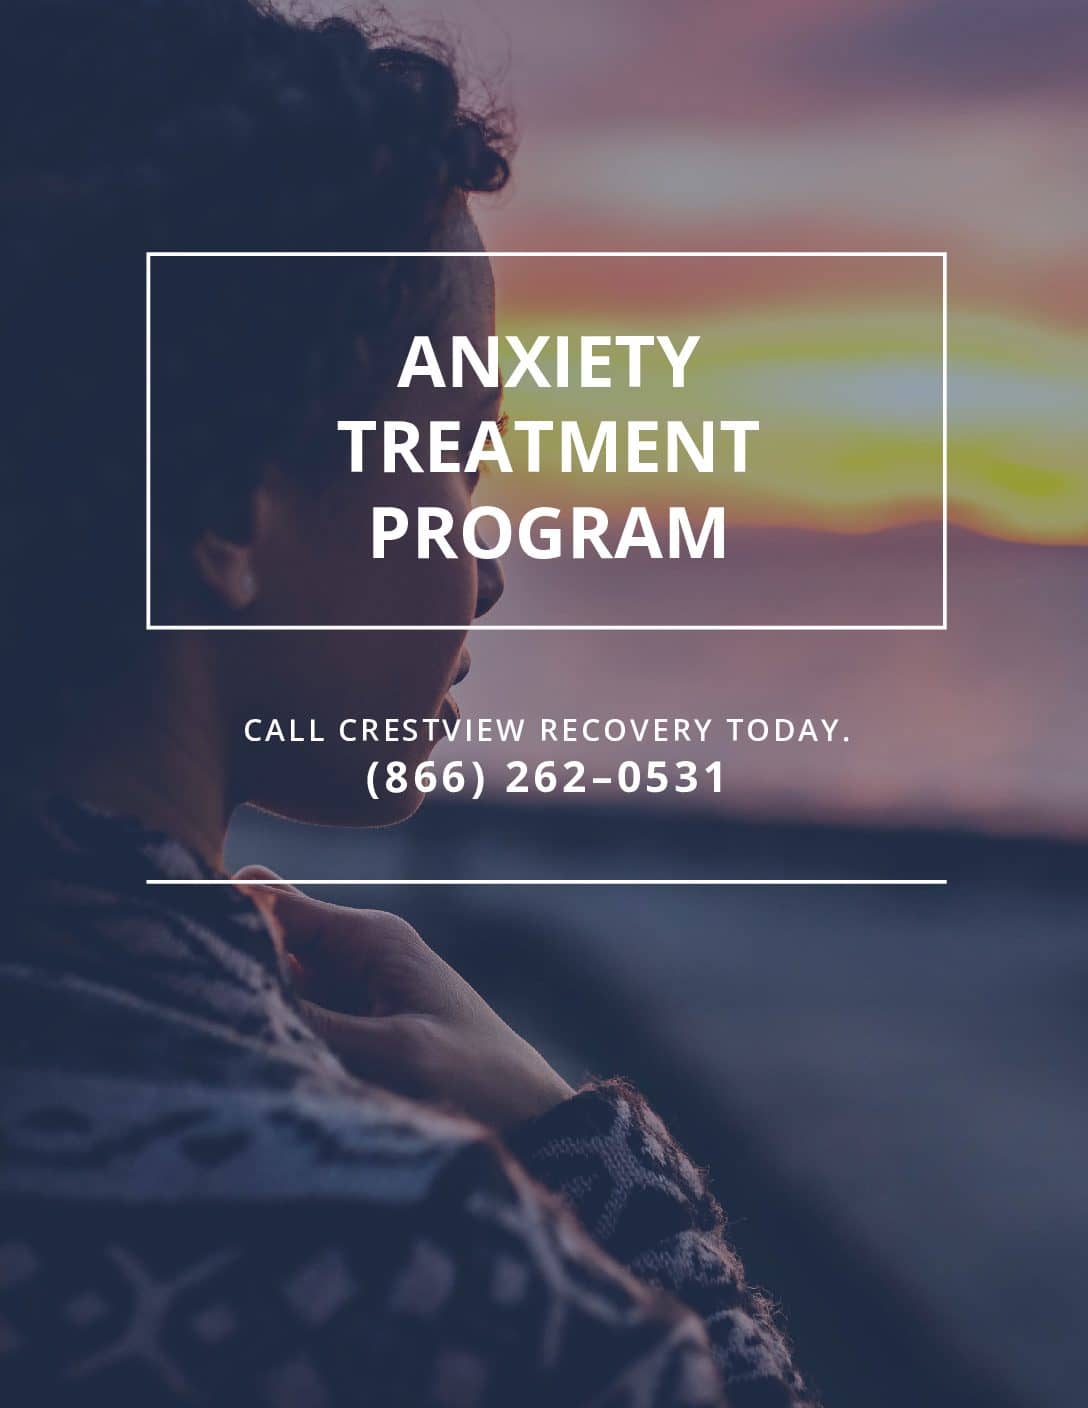 Crestview Recovery Anxiety Treatment Program Pdf